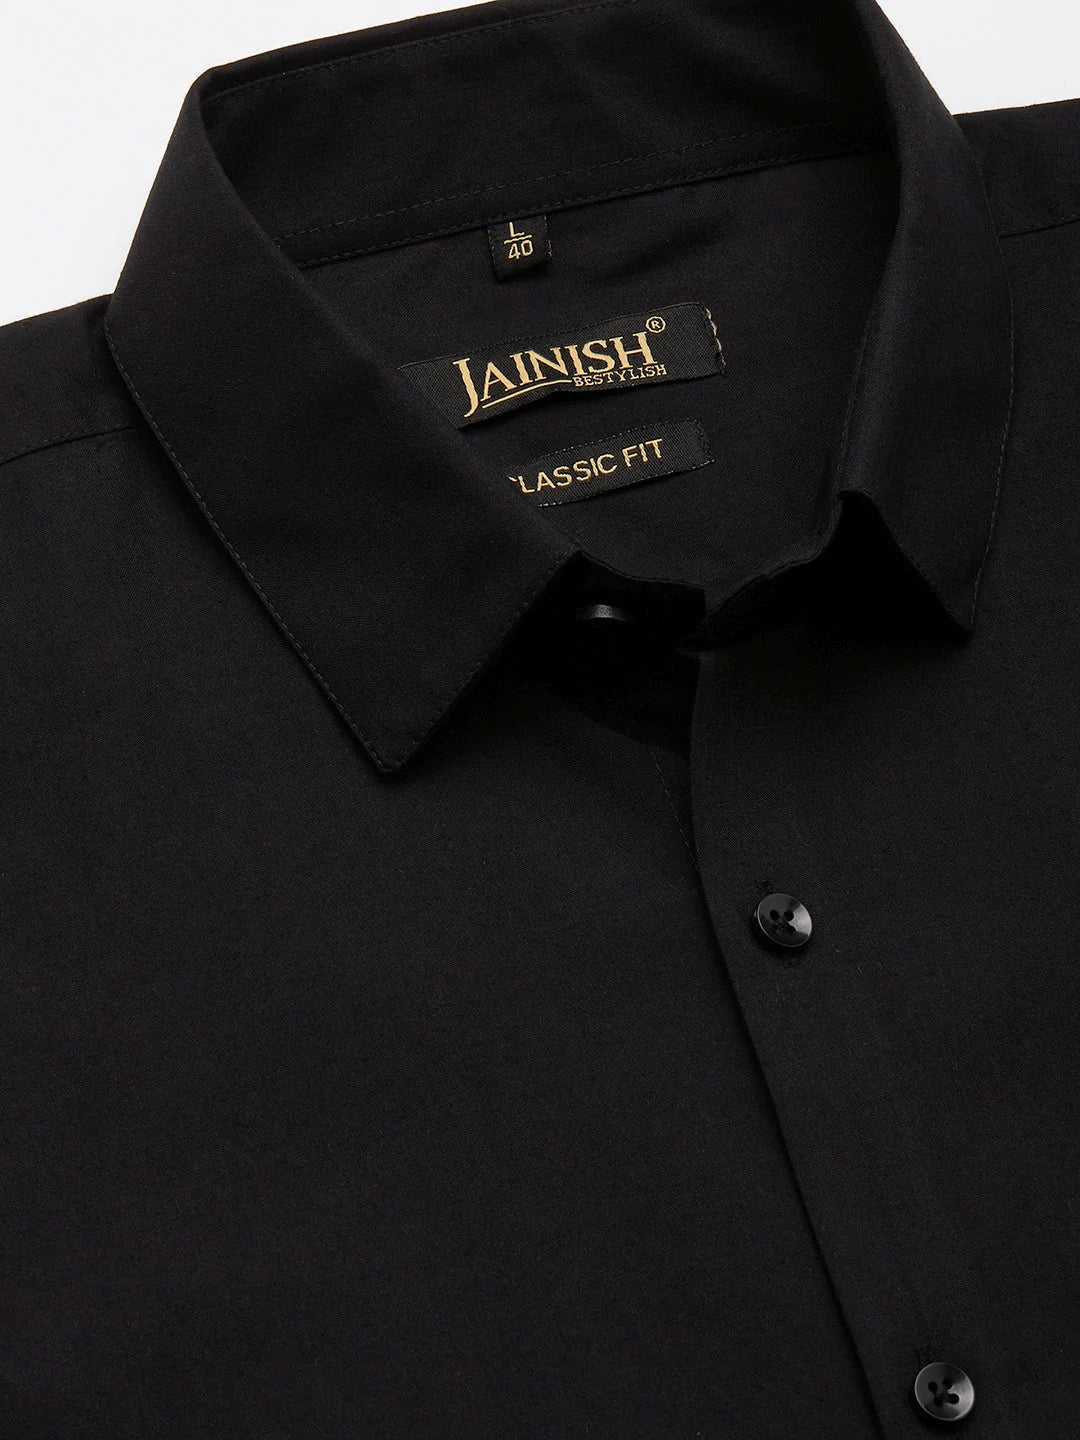 Jainish Men's Cotton Printed Formal Shirts ( SF 806Black )